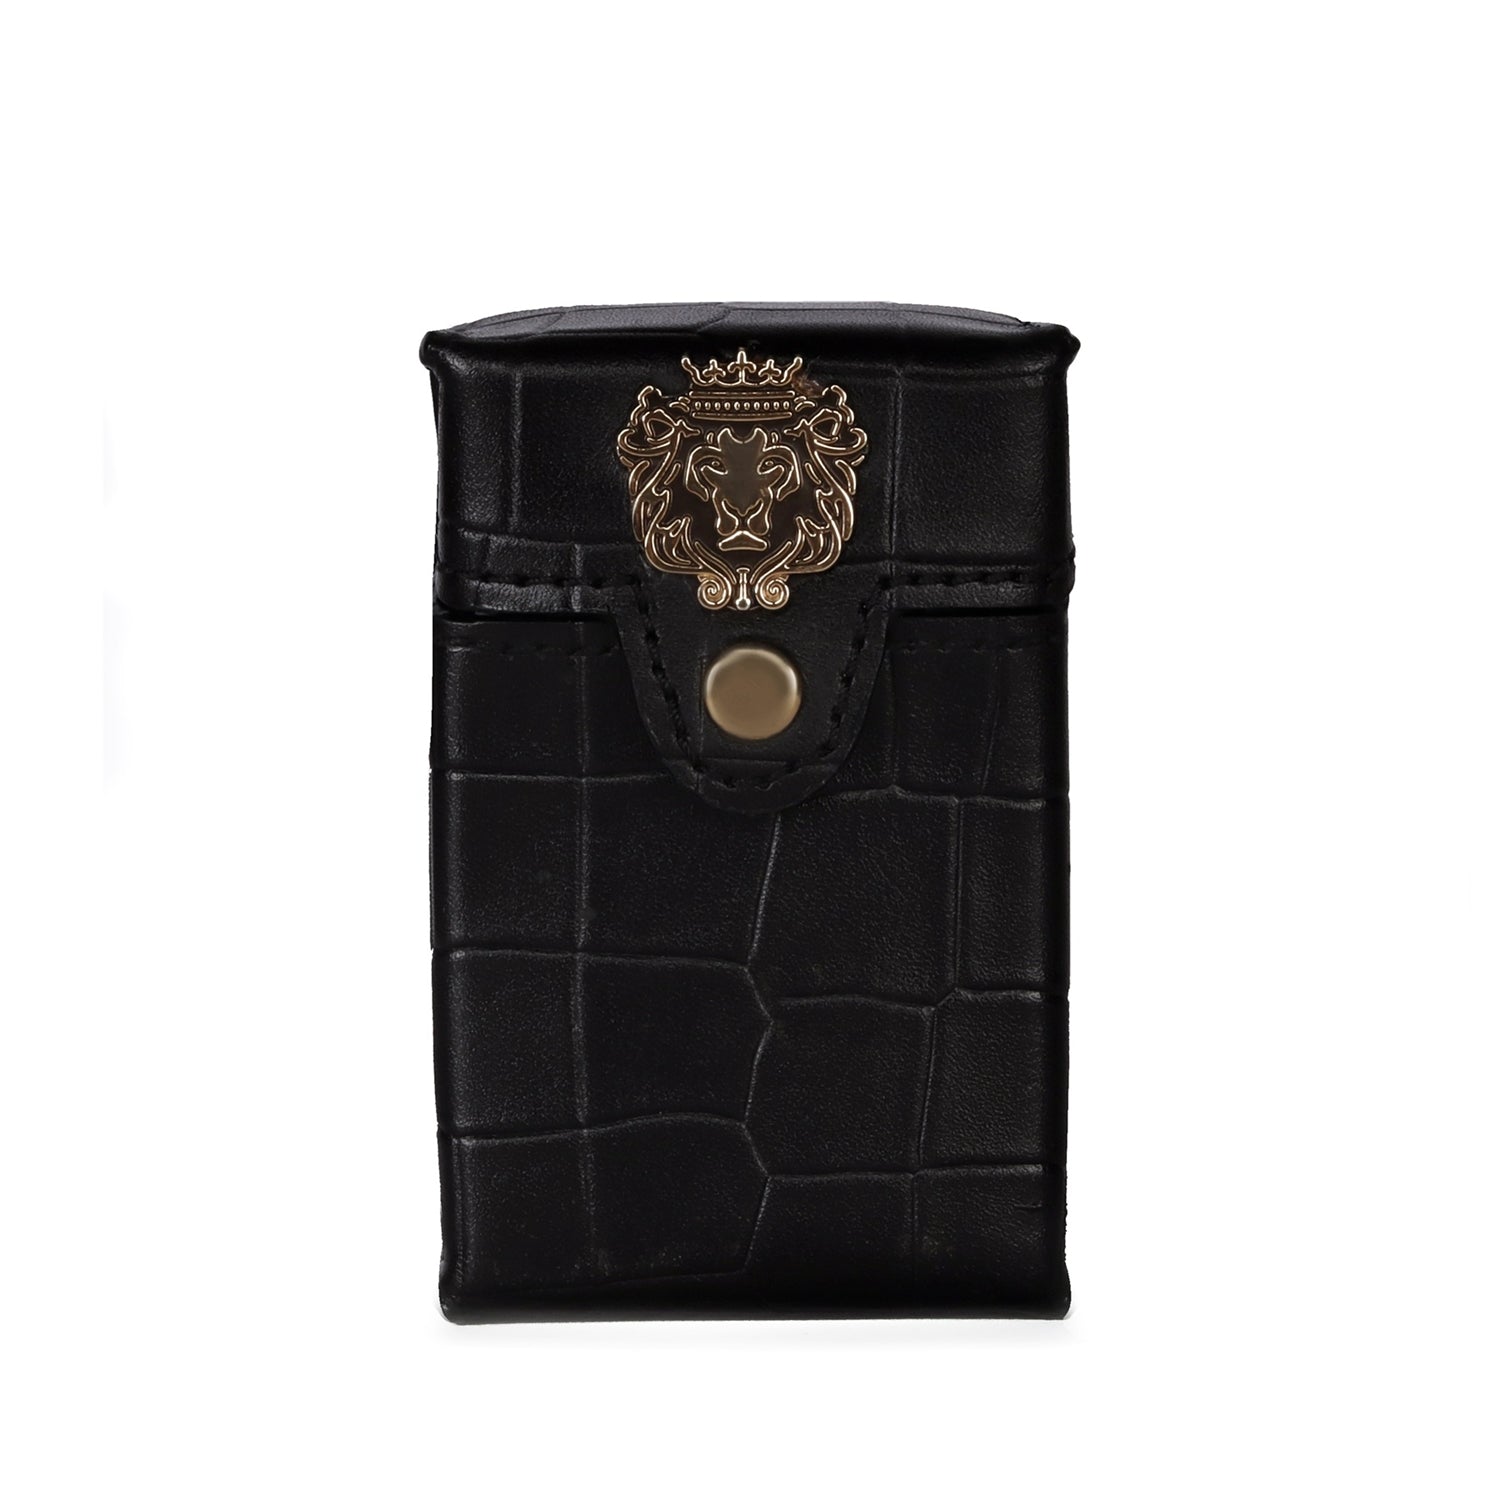 Metal Lion Vintage Patina Cigarette Carrying Case Black Deep Cut Croco Print Leather By Brune & Bareskin